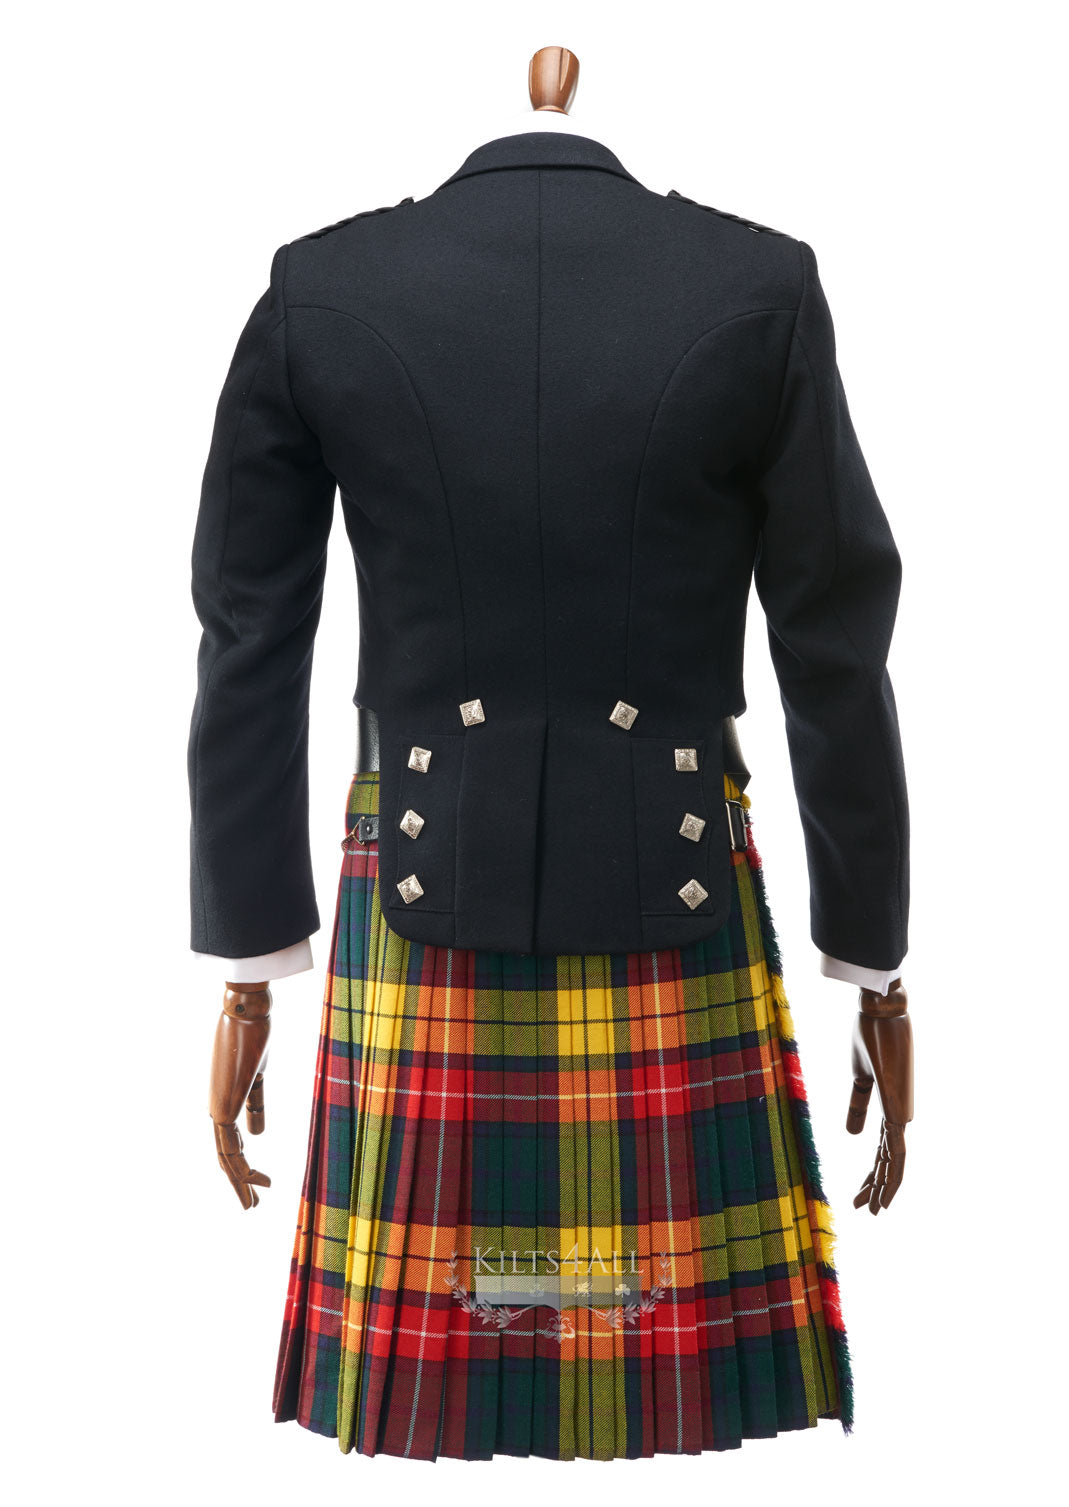 Mens Prince Charlie Jacket & 3 Button Waistcoat to Buy – Kilts4All